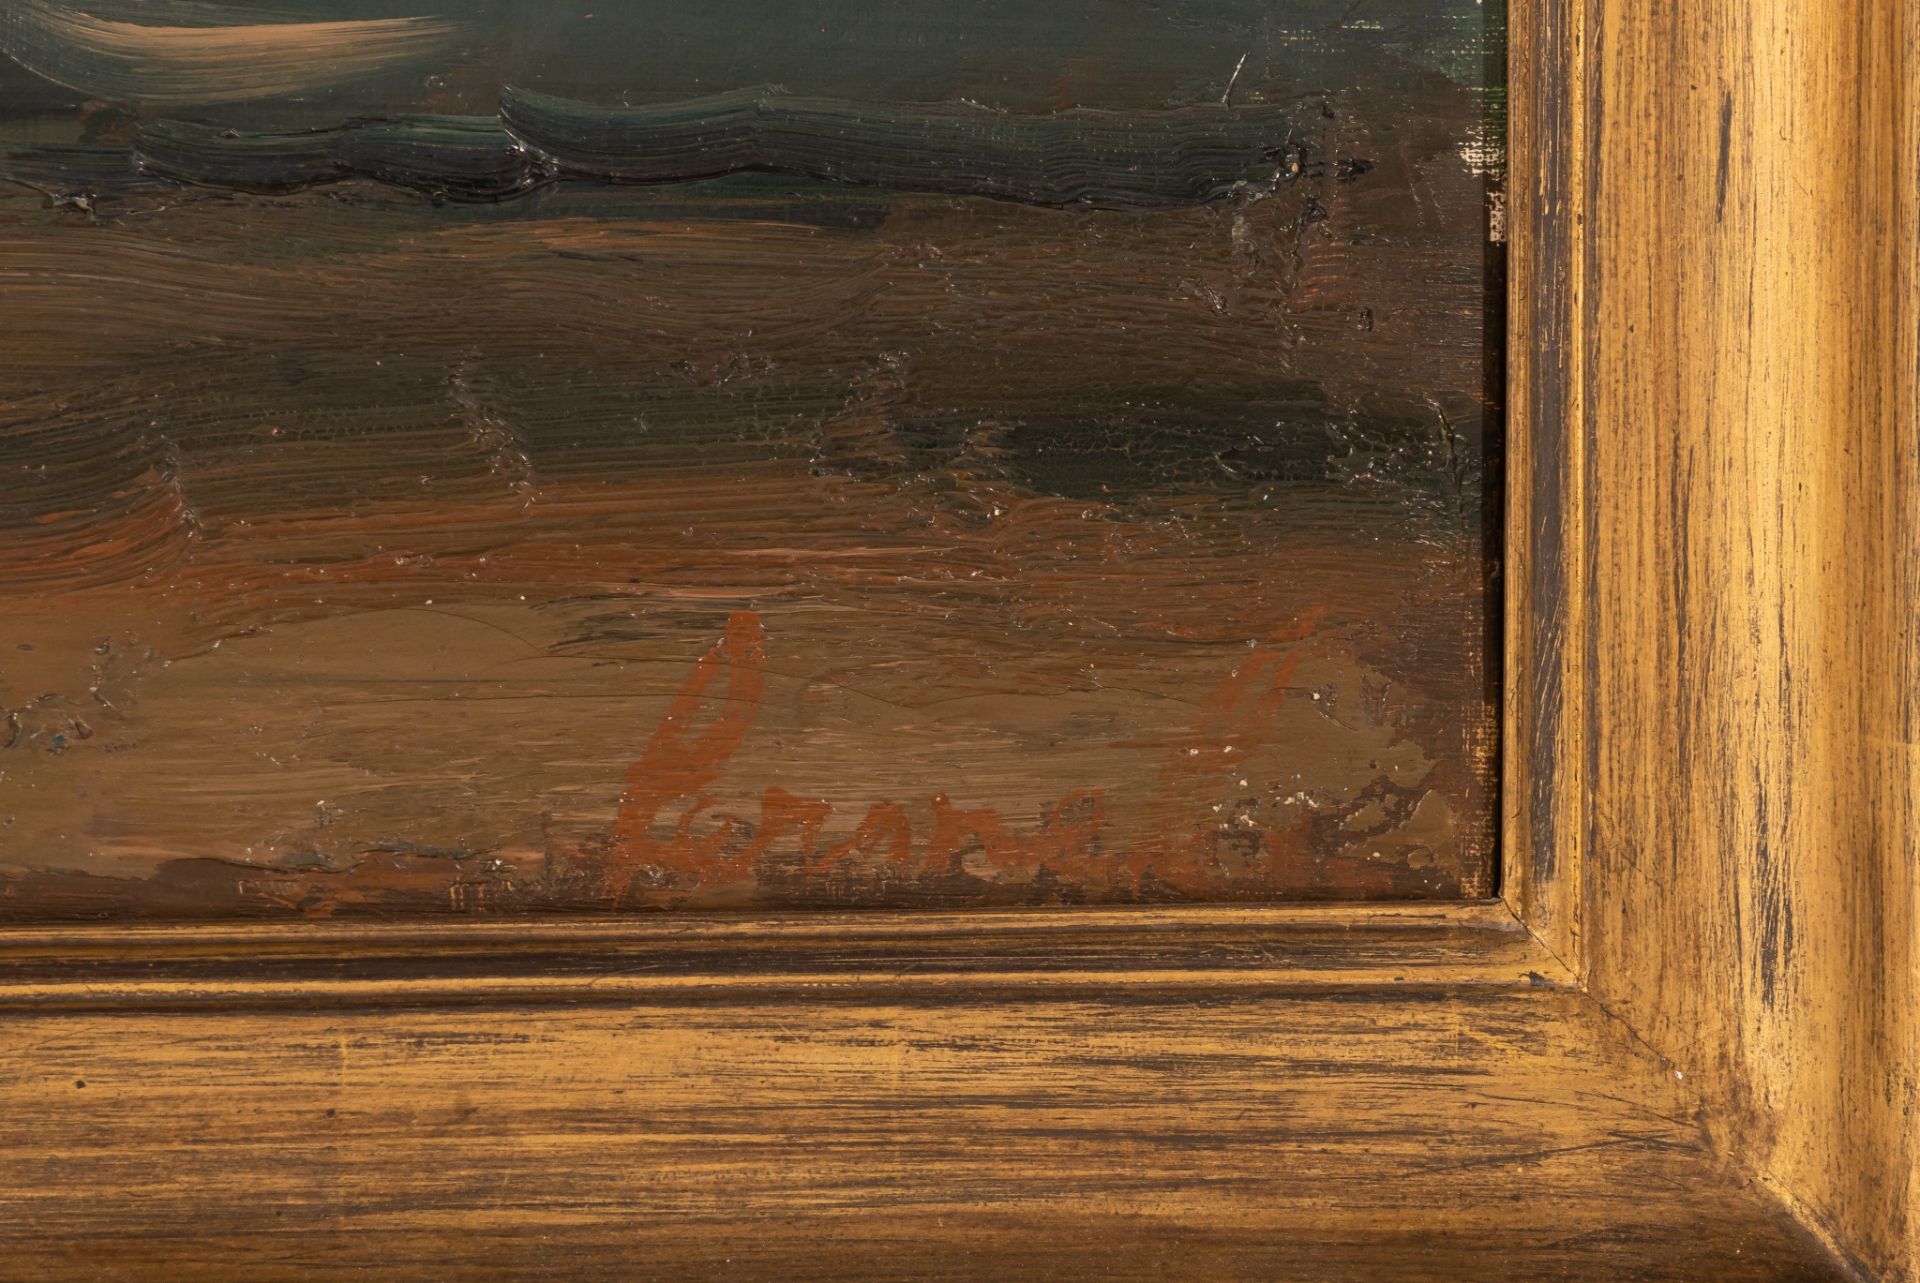 Constant Permeke (1886-1952), marine, oil on canvas, 65 x 74 cm - Bild 4 aus 5